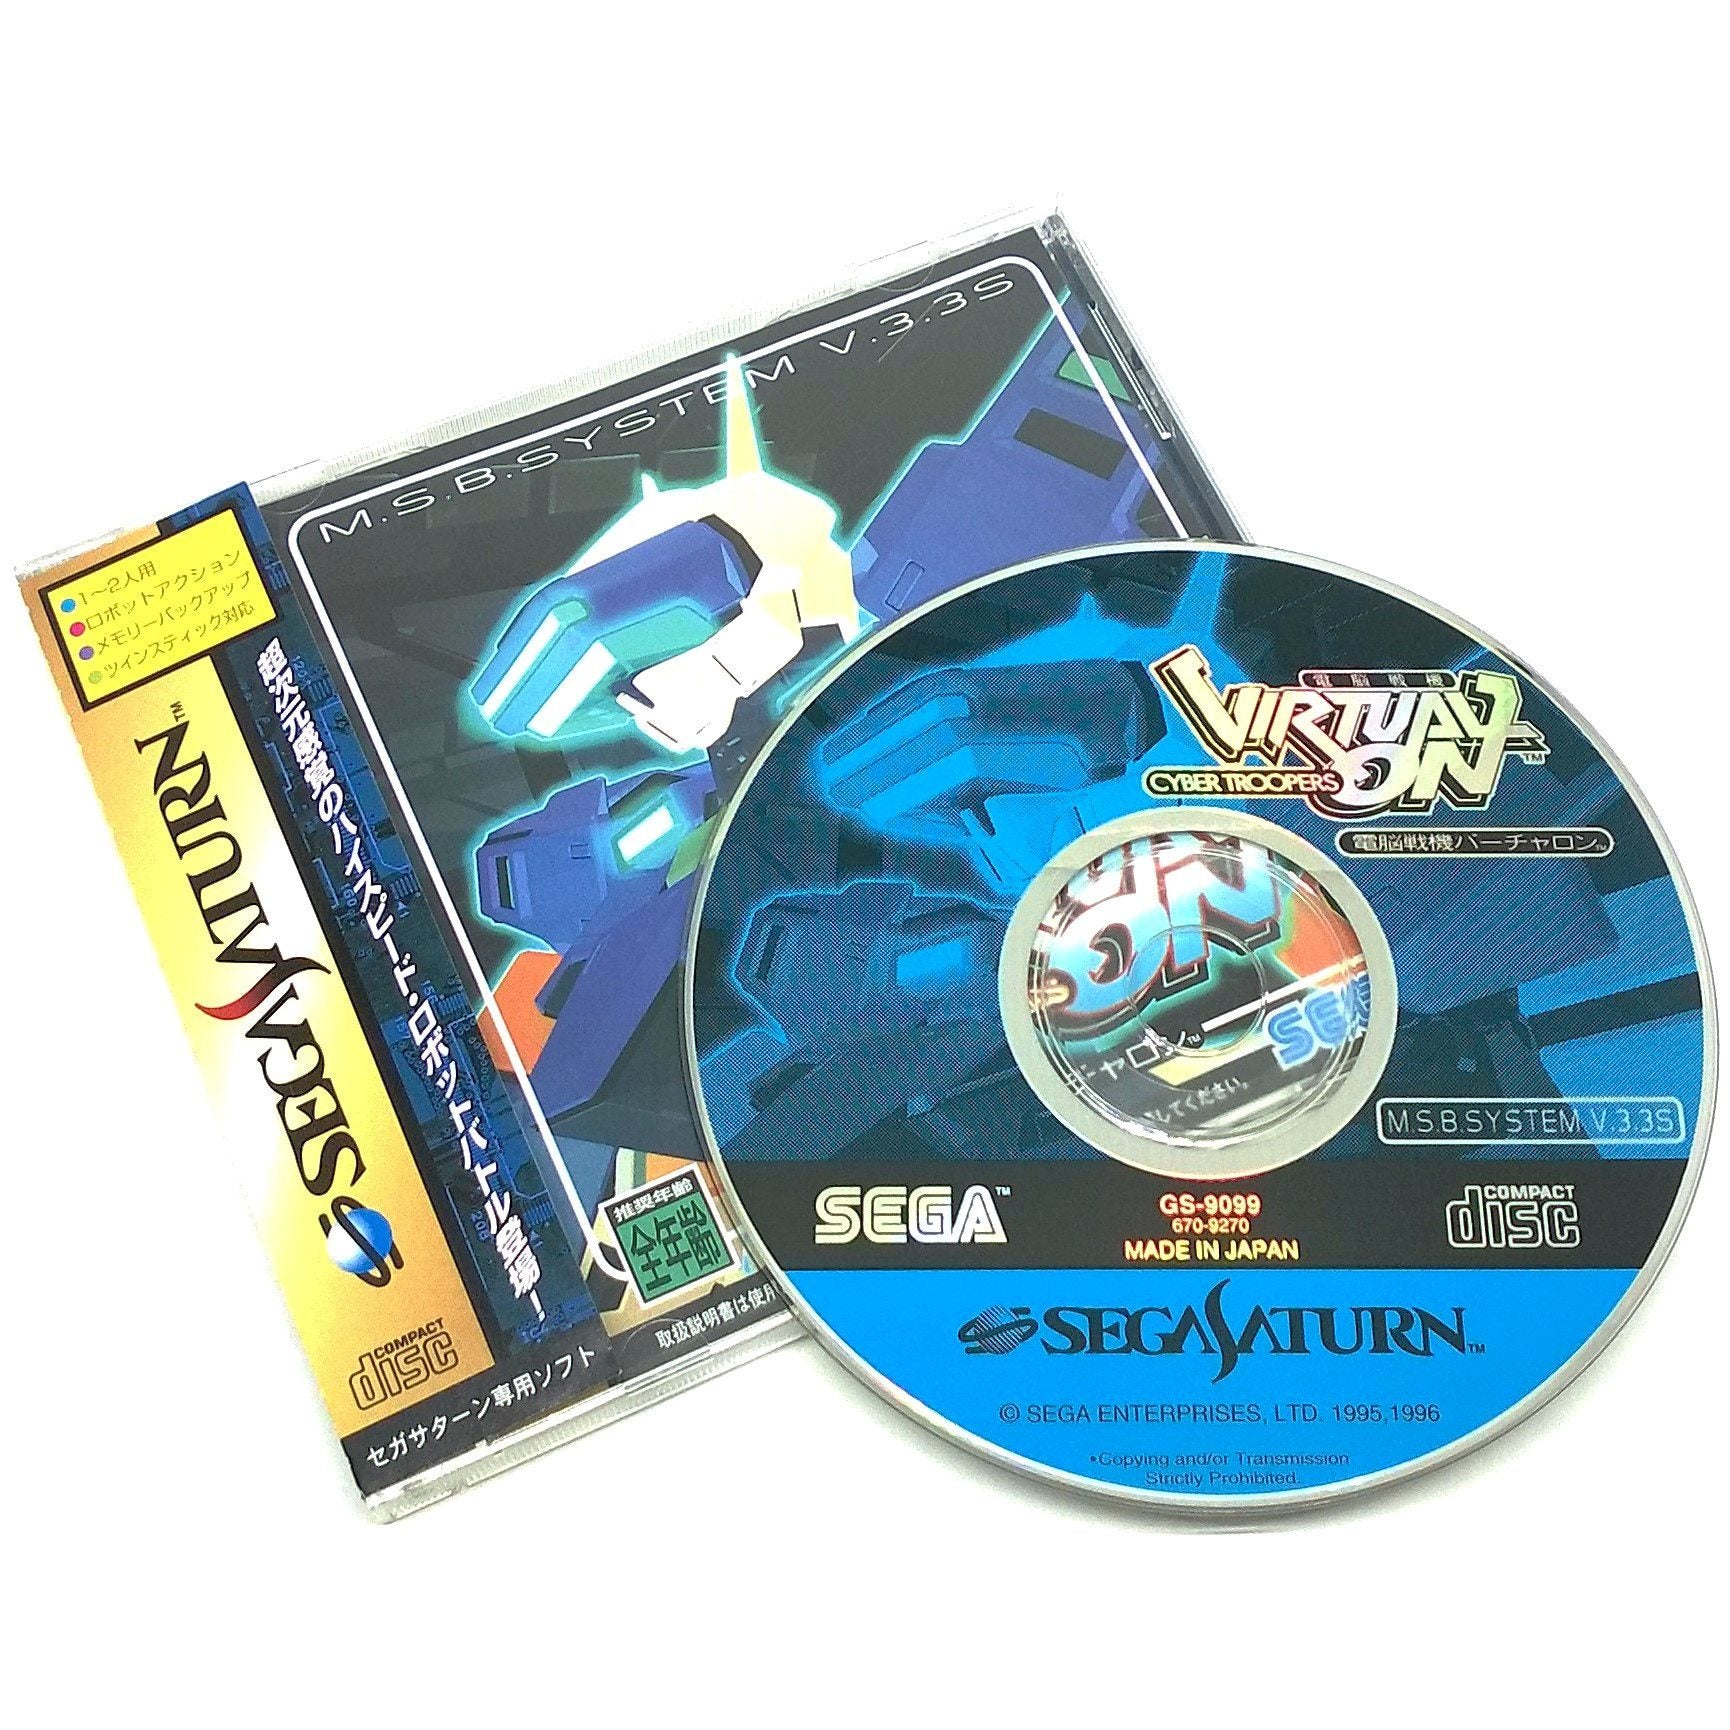 Dennou Senki: Virtual On for Saturn (import)